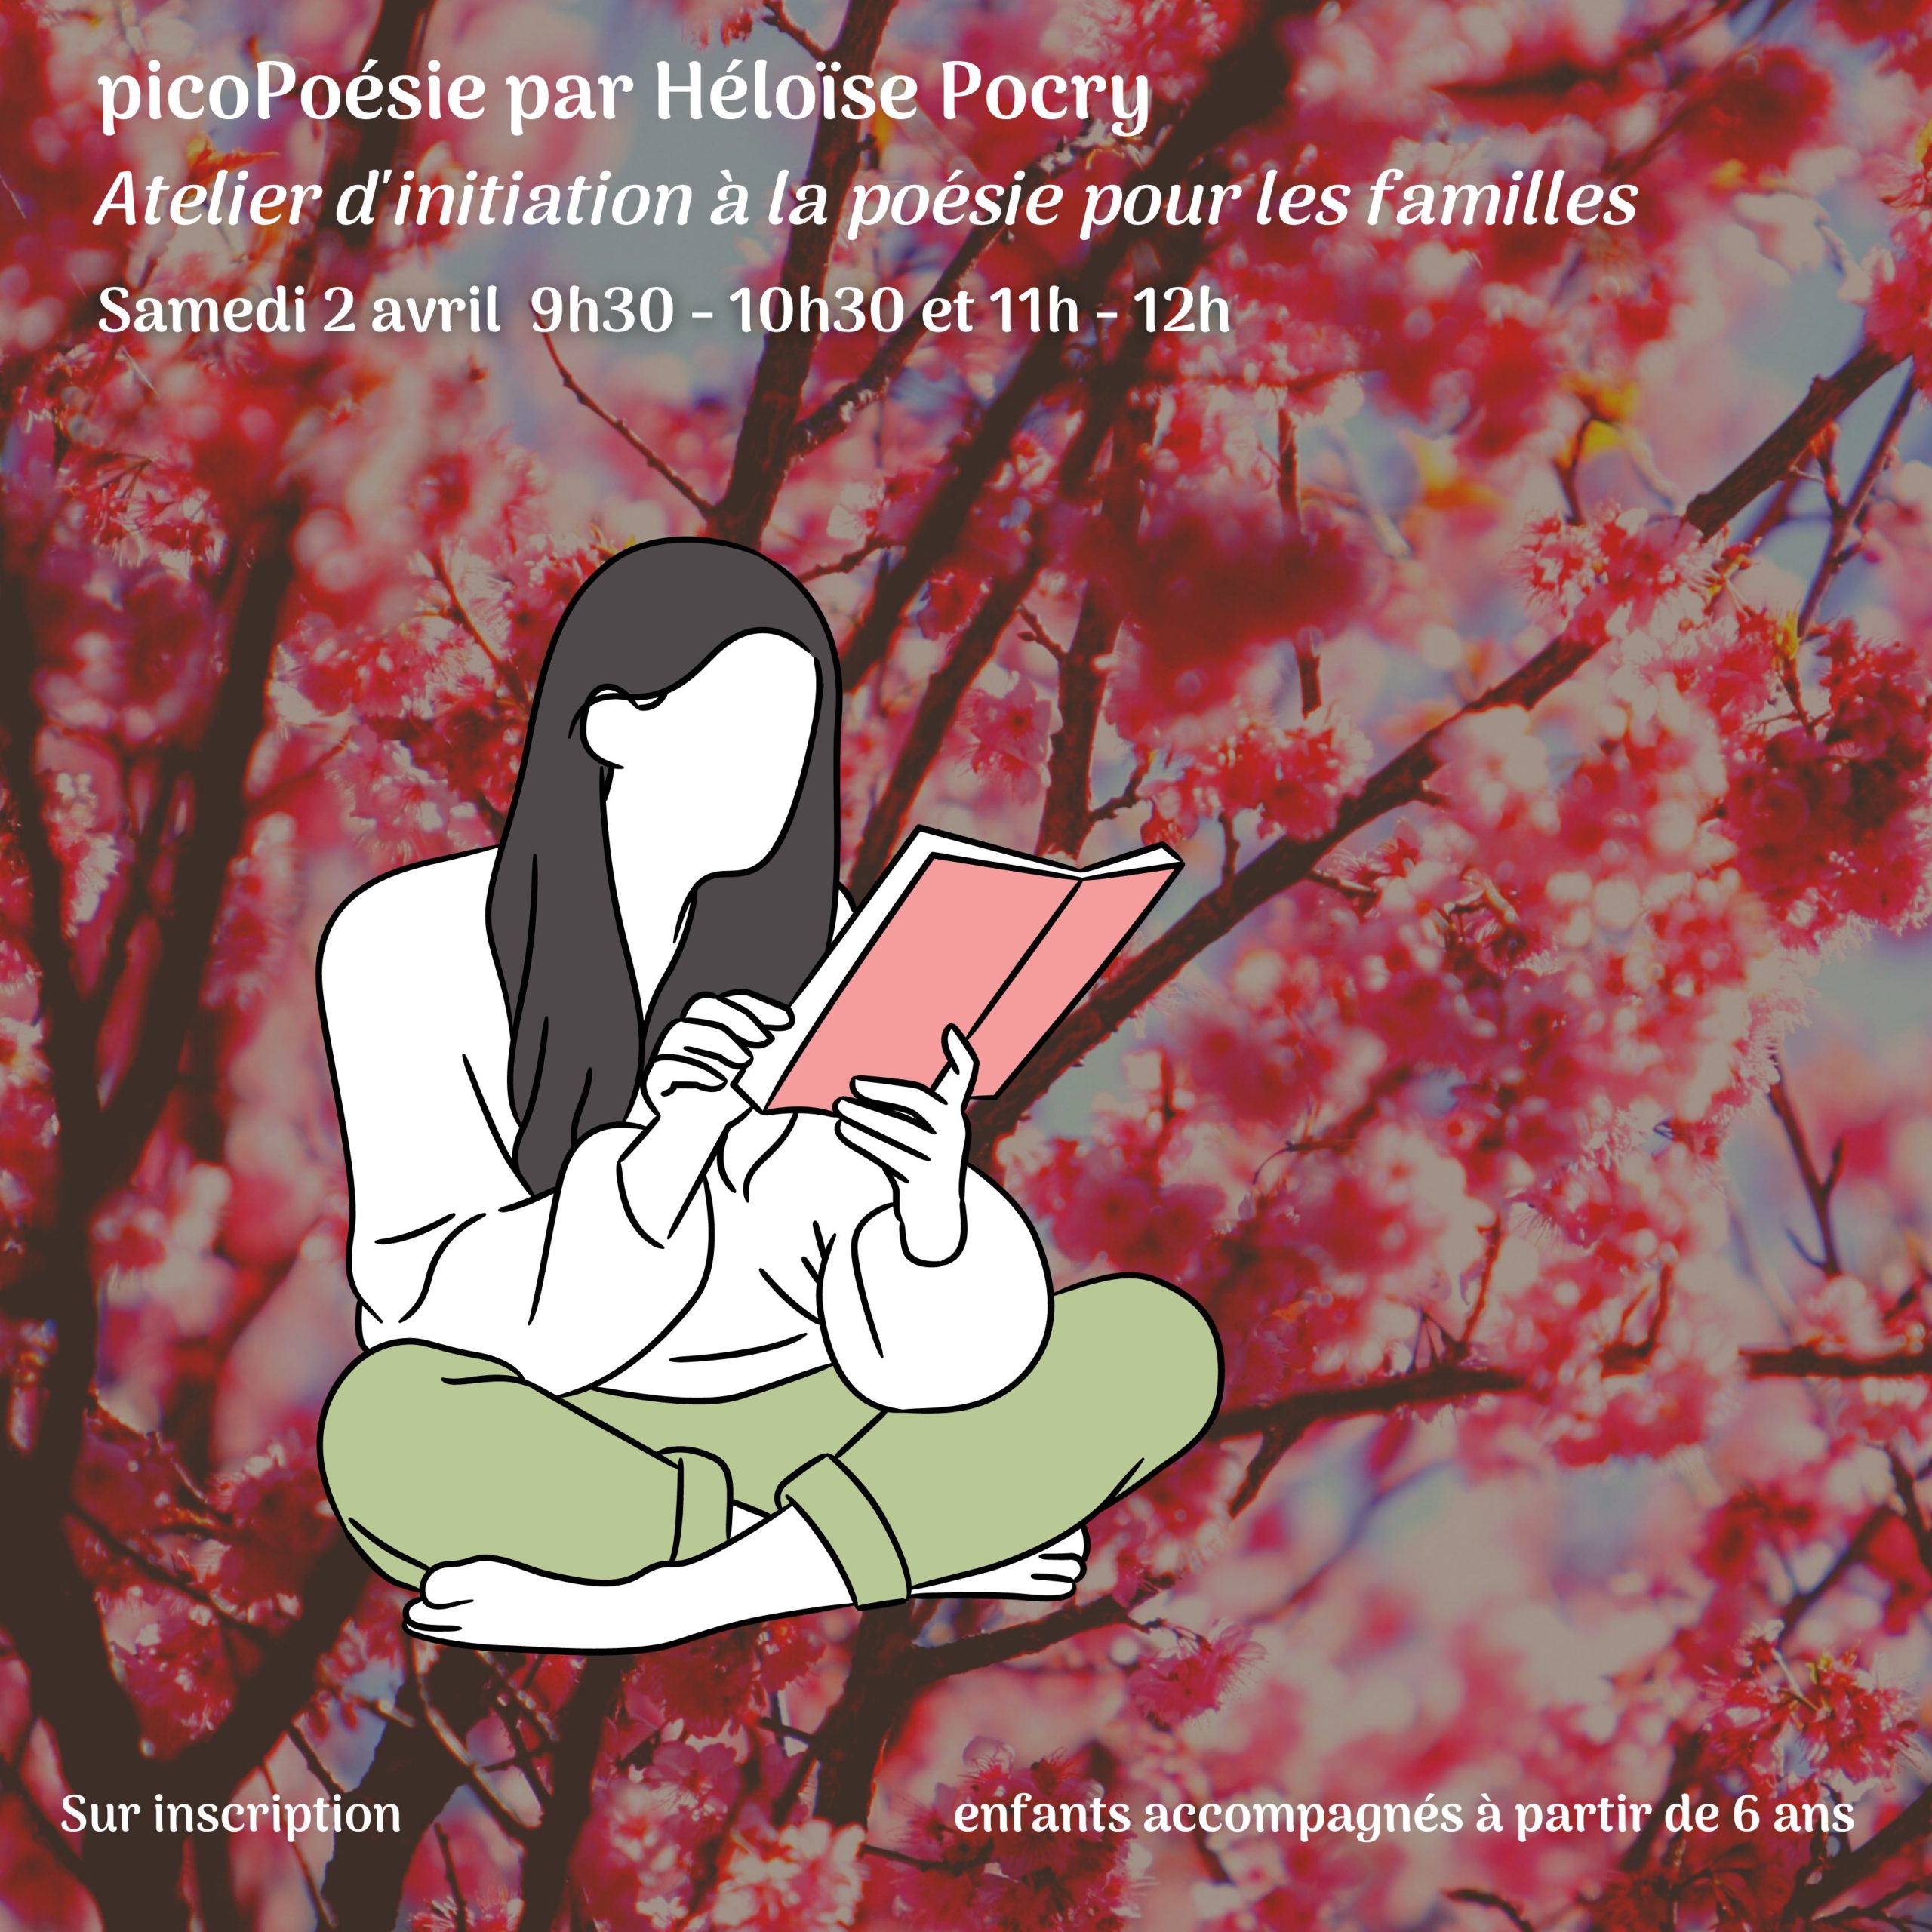 You are currently viewing picoPoésie par Héloïse Pocry